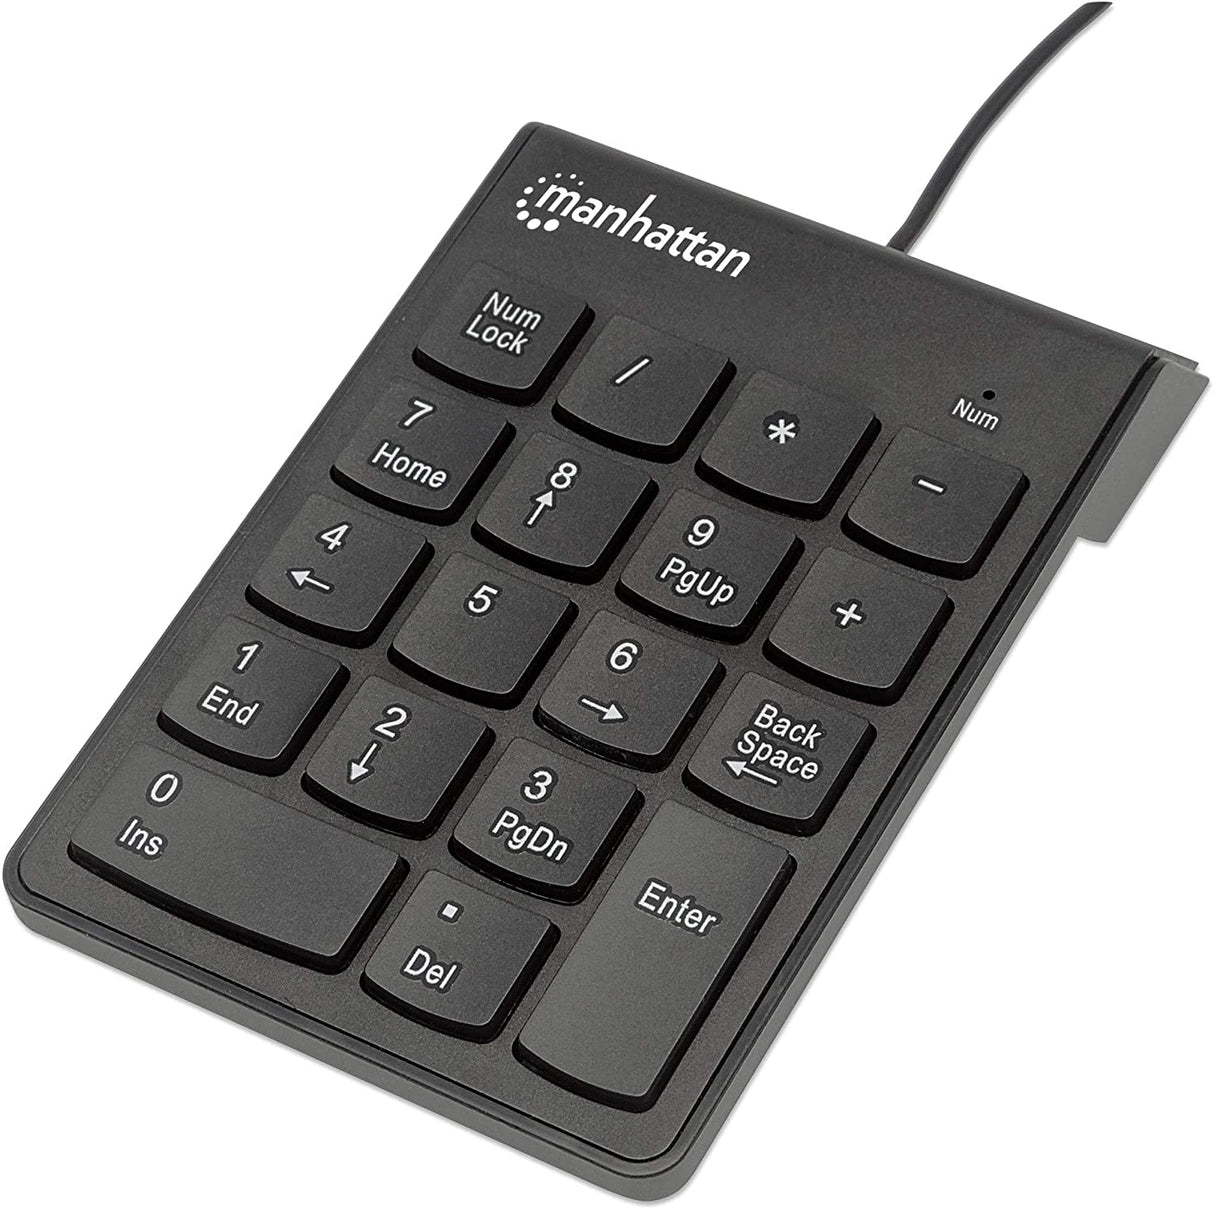 Manhattan USB Numeric Keypad with 19 Full-Size Keys - 176354